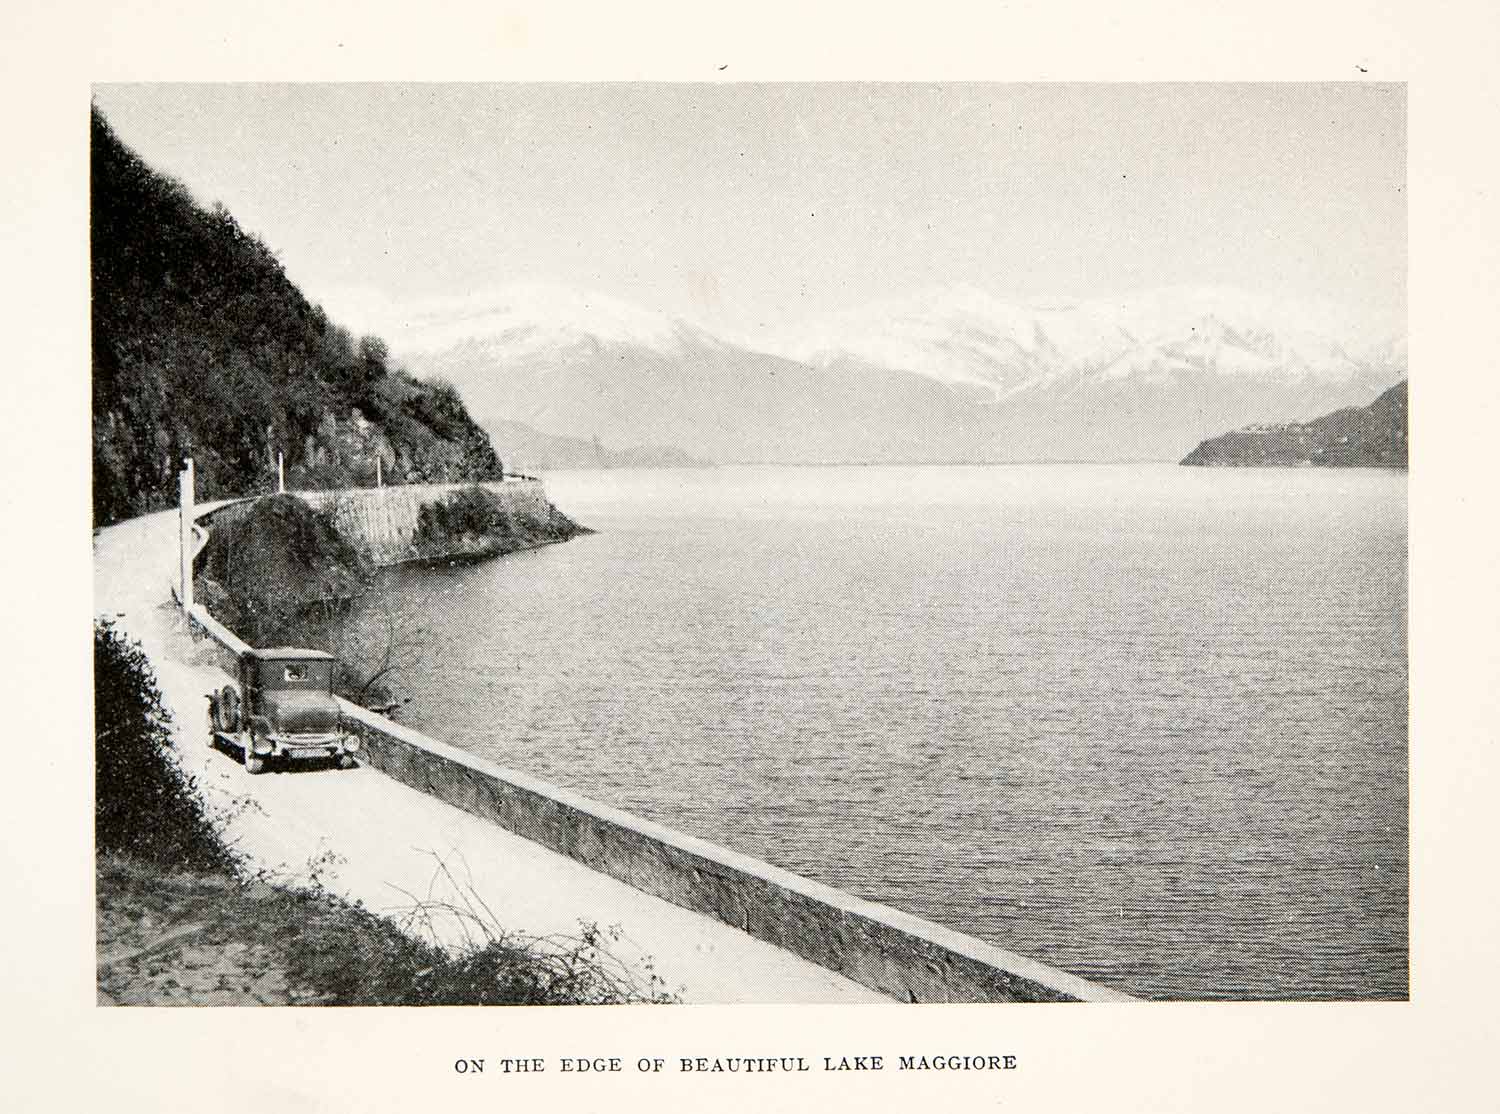 1928 Print Lake Maggiore Italy Automobile Road Coast Mountain Landscape XGPC1